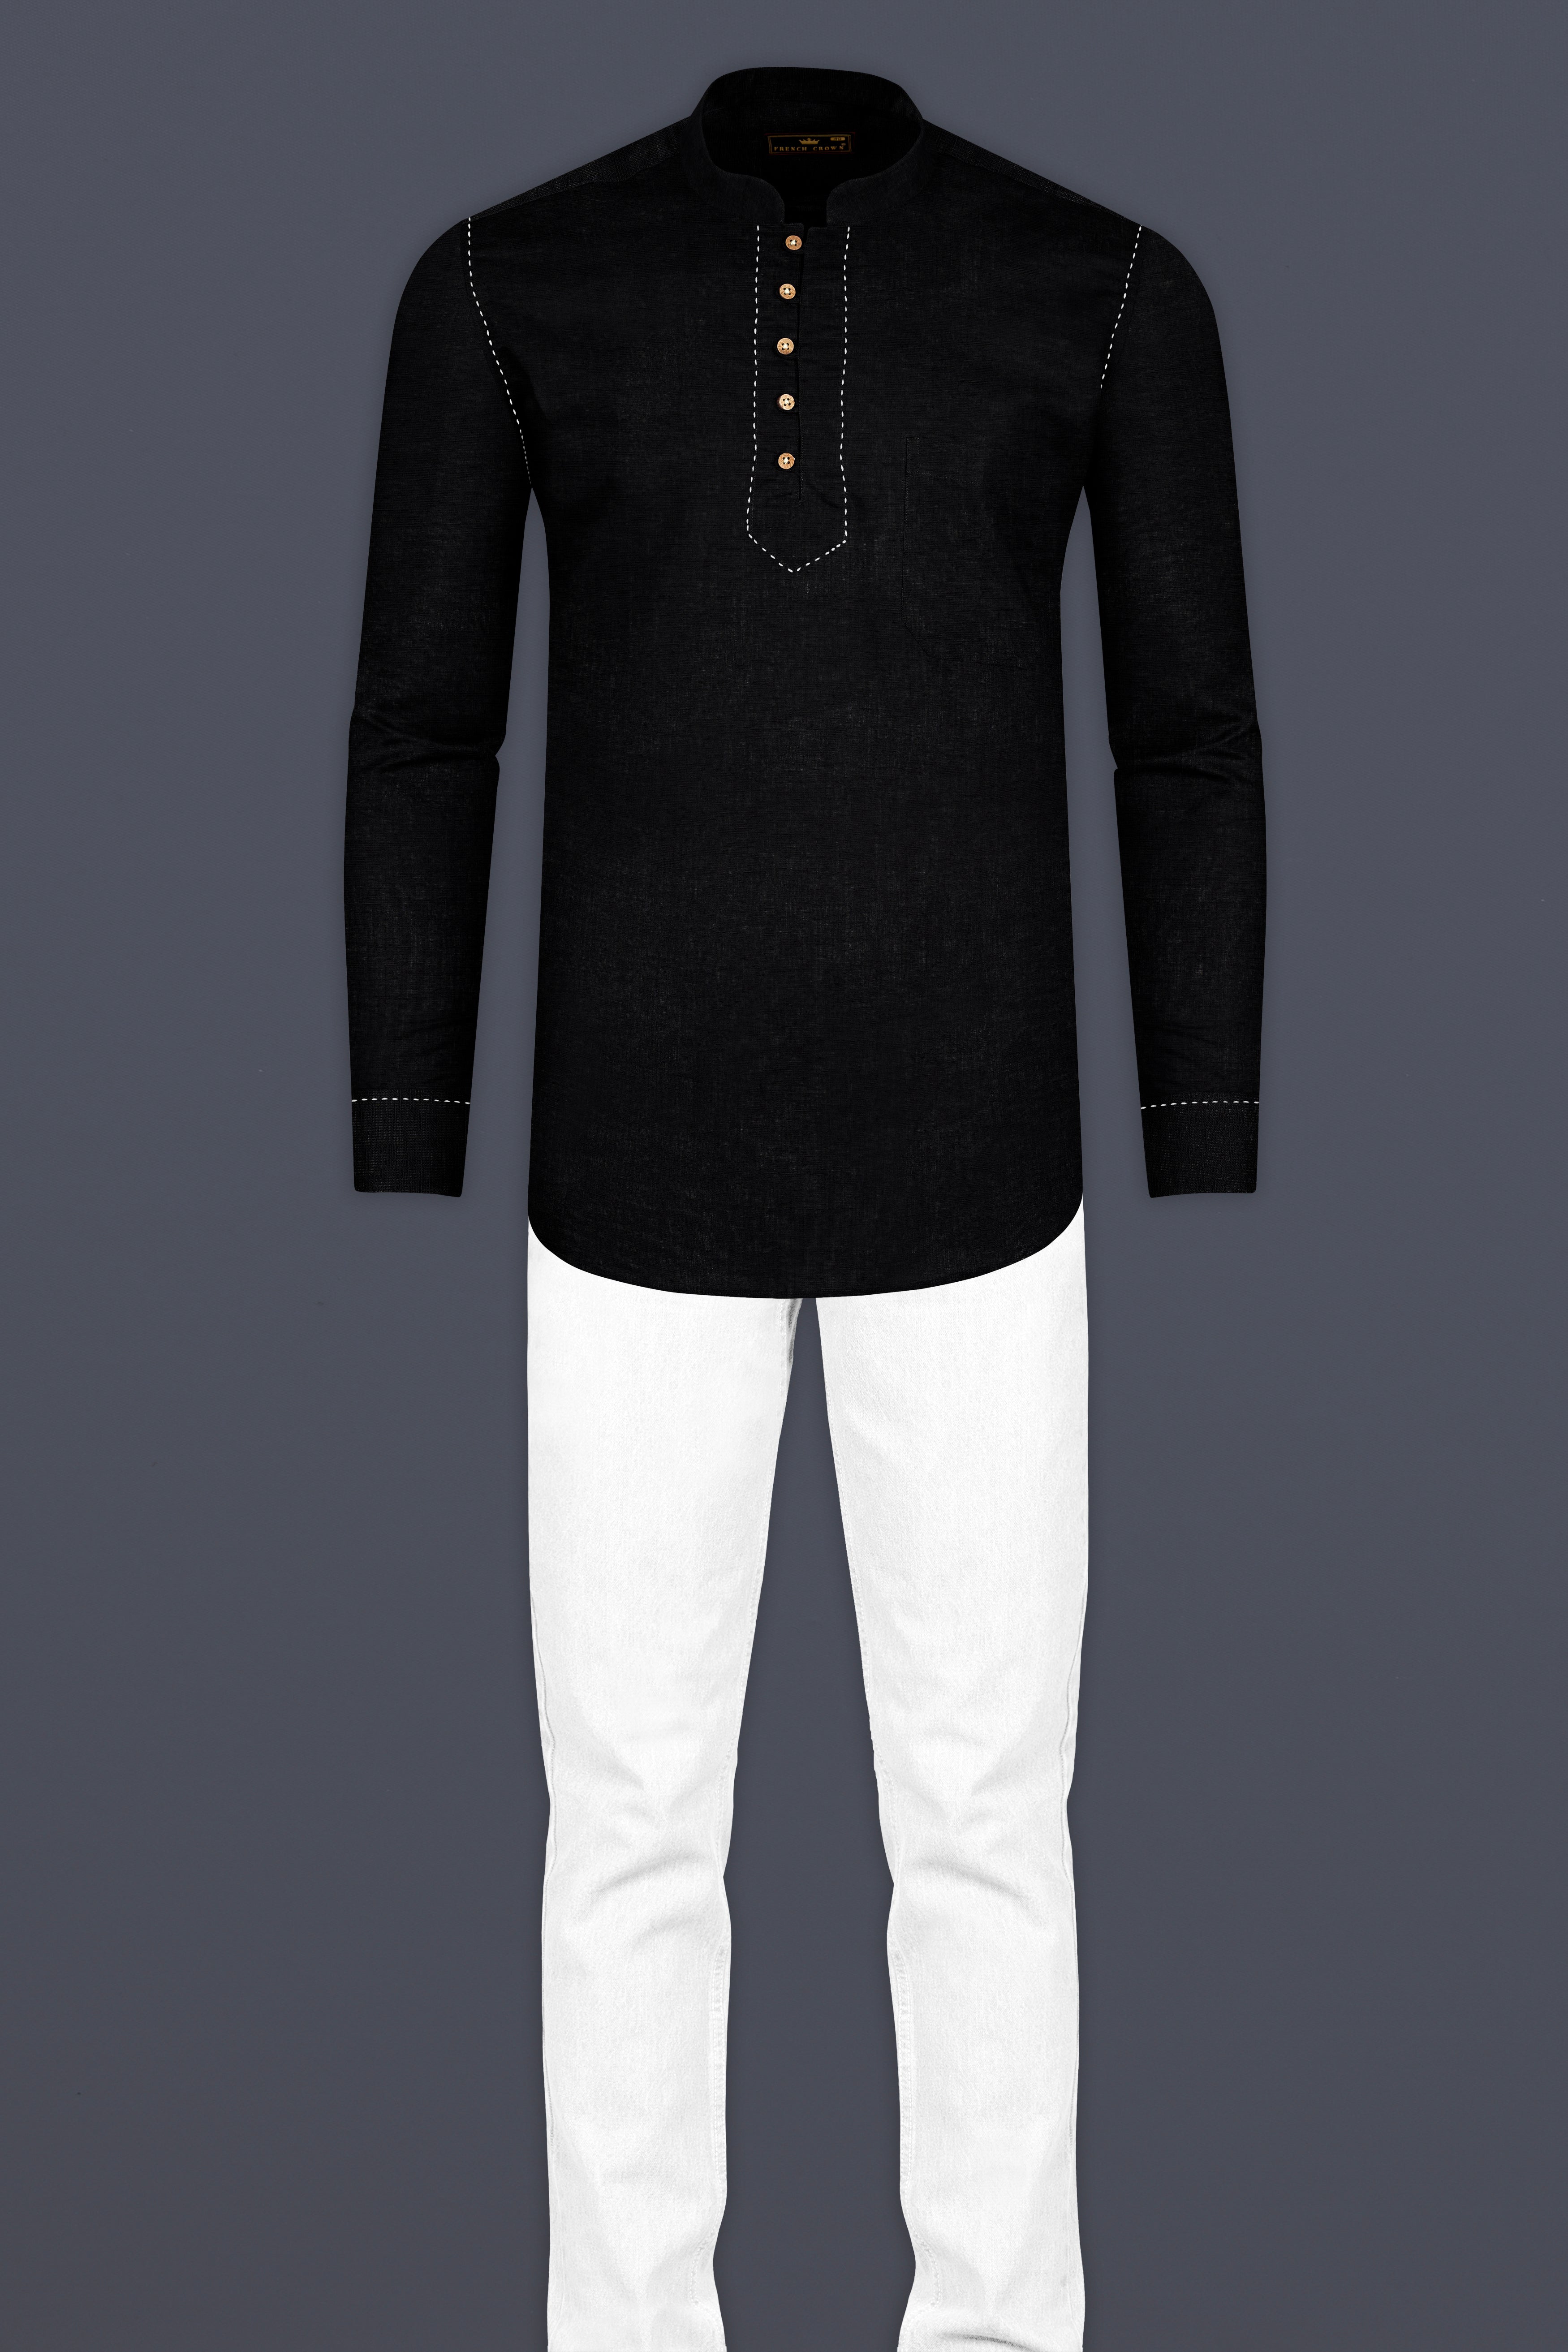 Jade Black Rich stitched Indian Kurta Style Luxurious Linen Shirt